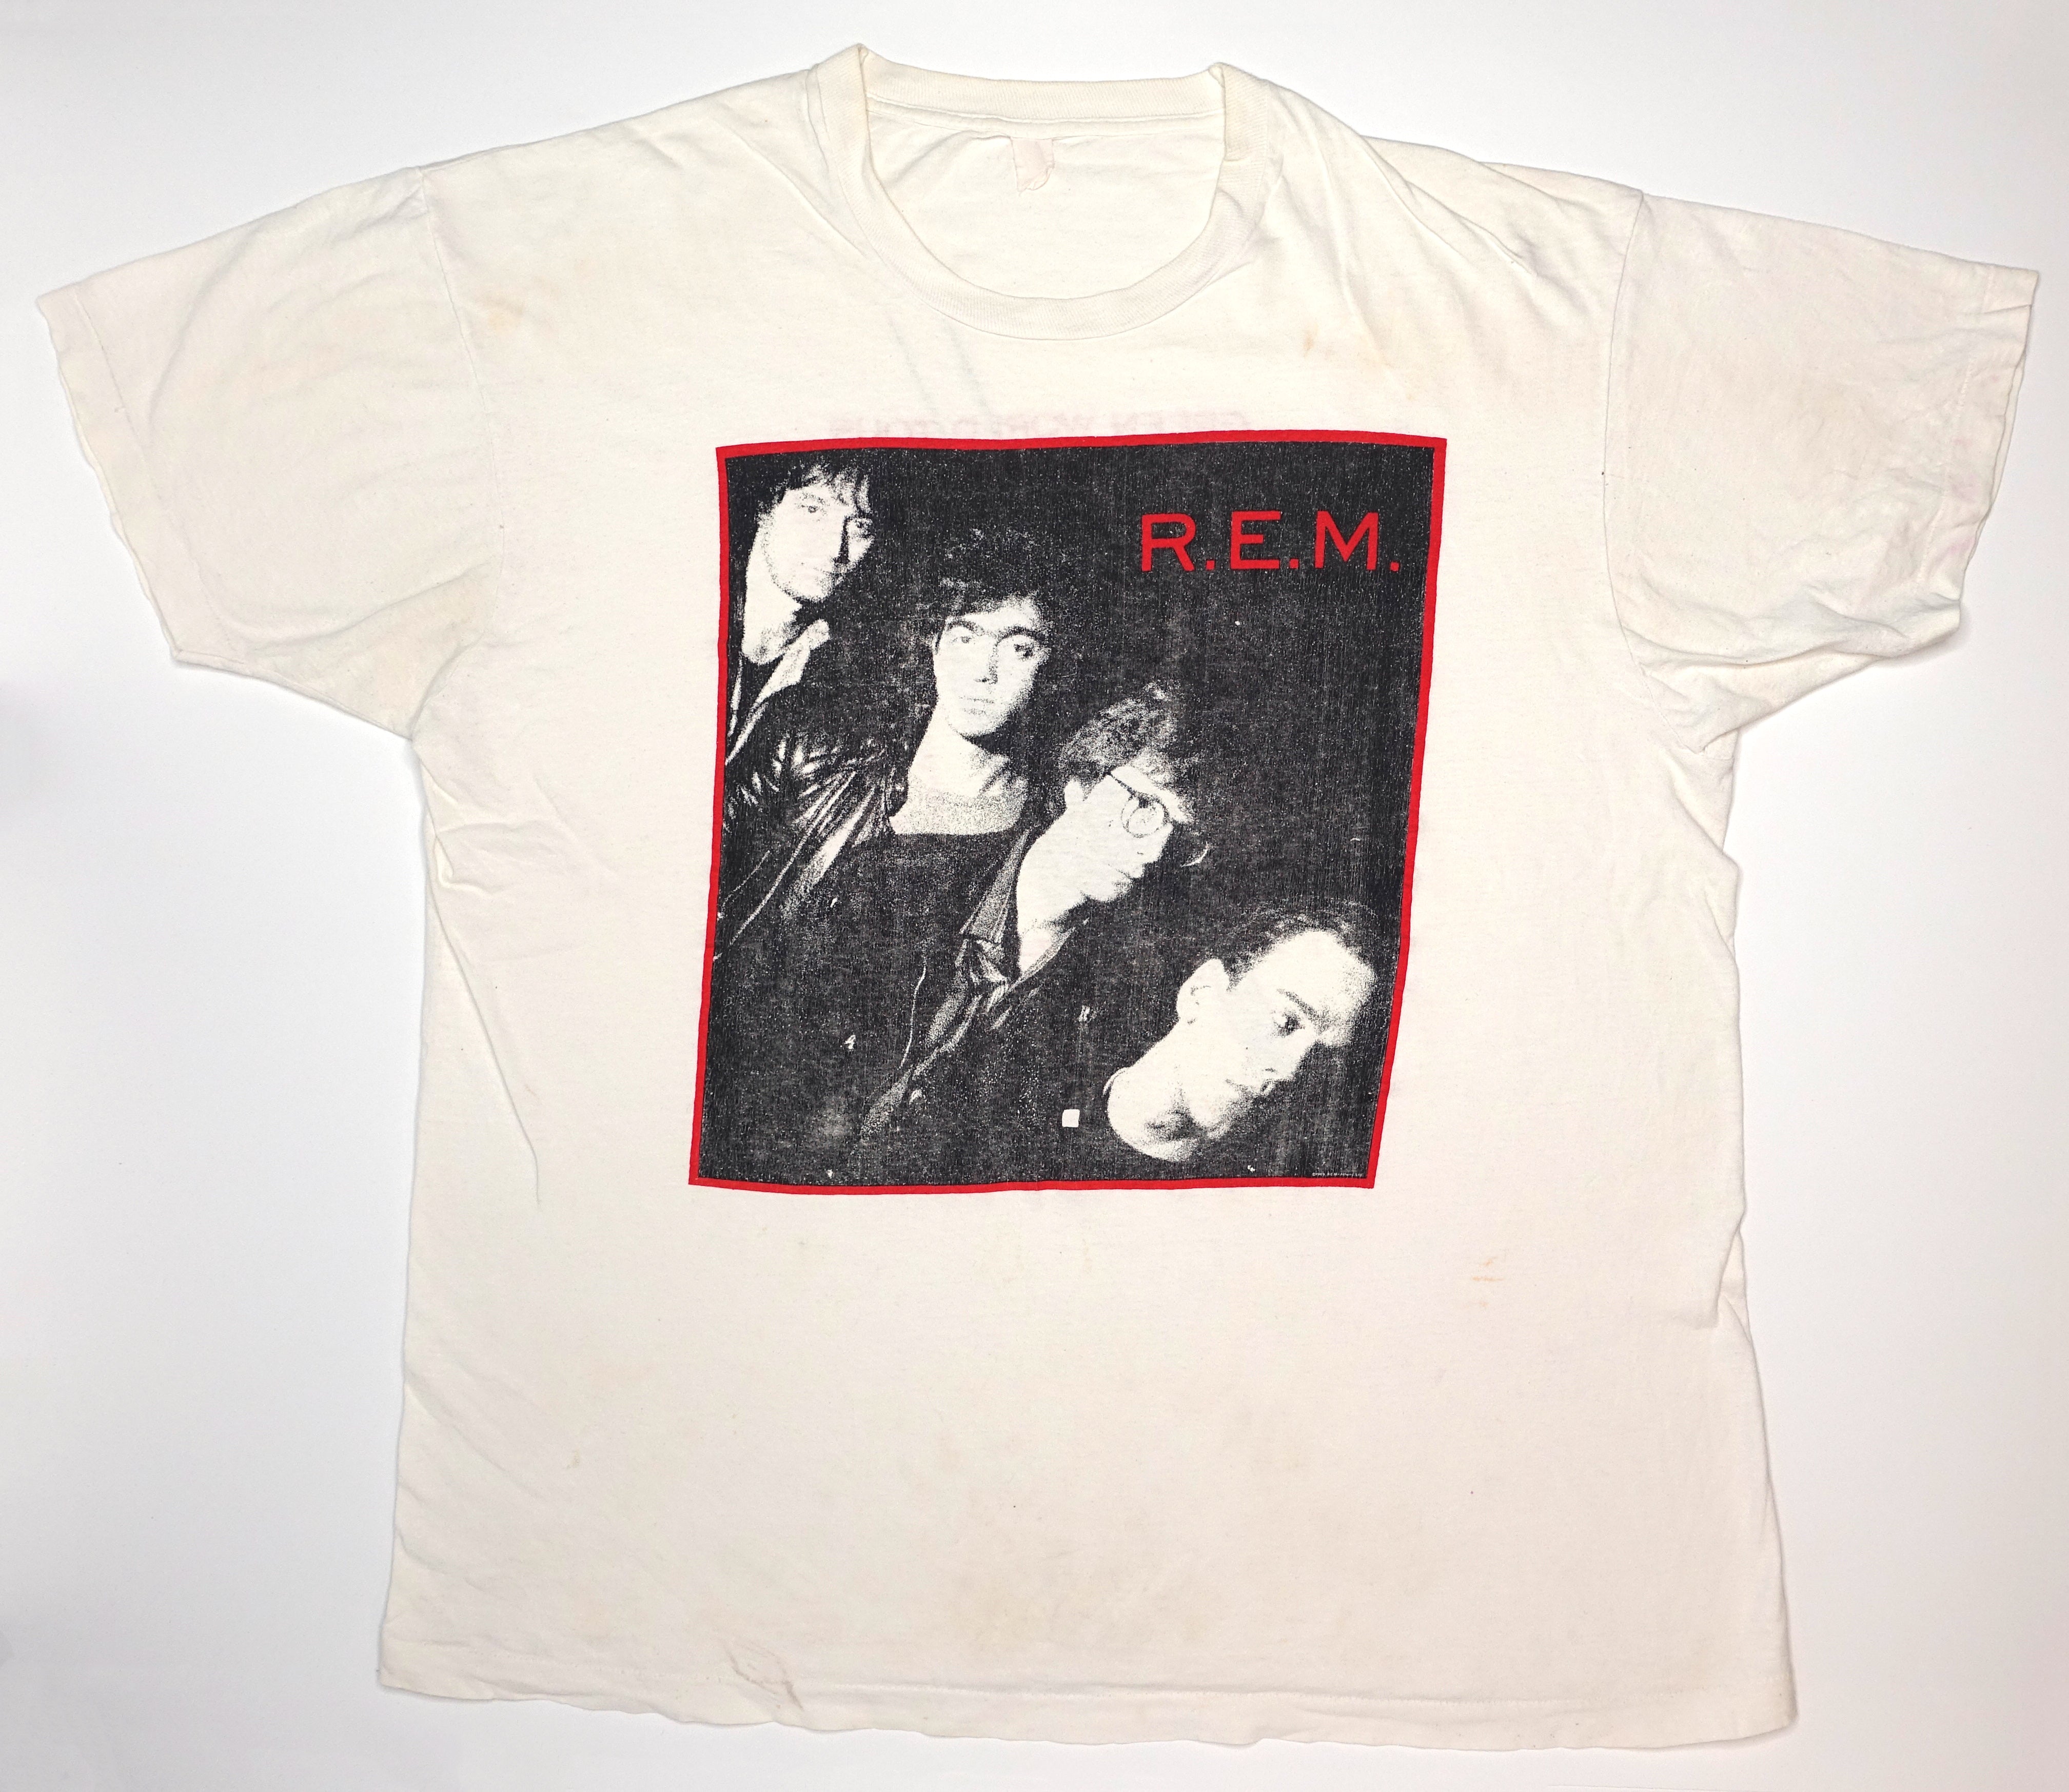 R.E.M. – Green World Tour 1989 Shirt Size XL